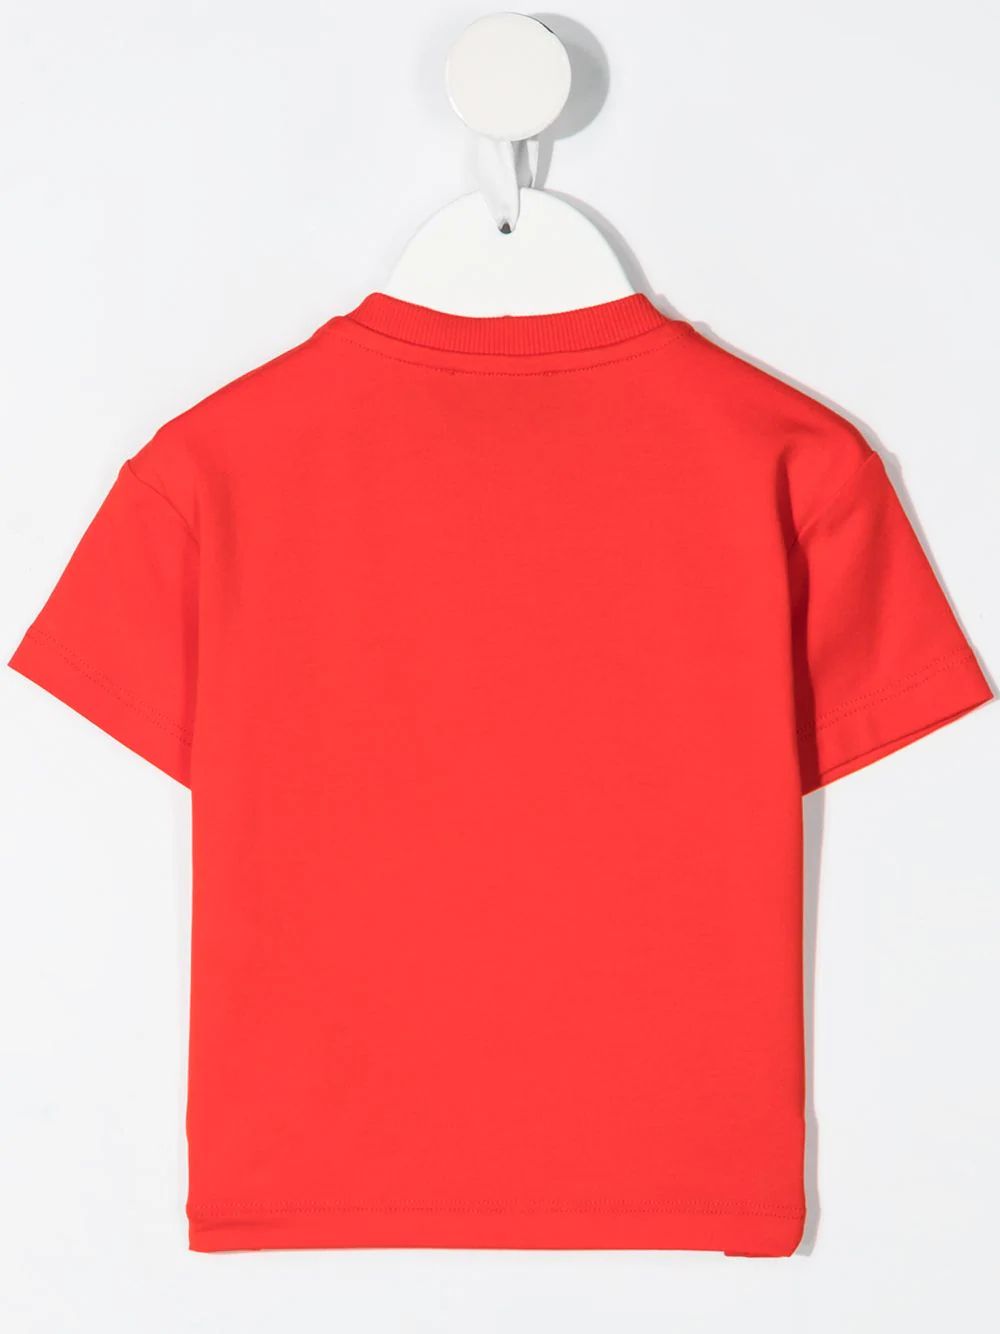 Baby Boys & Girls Red Cotton T-Shirt